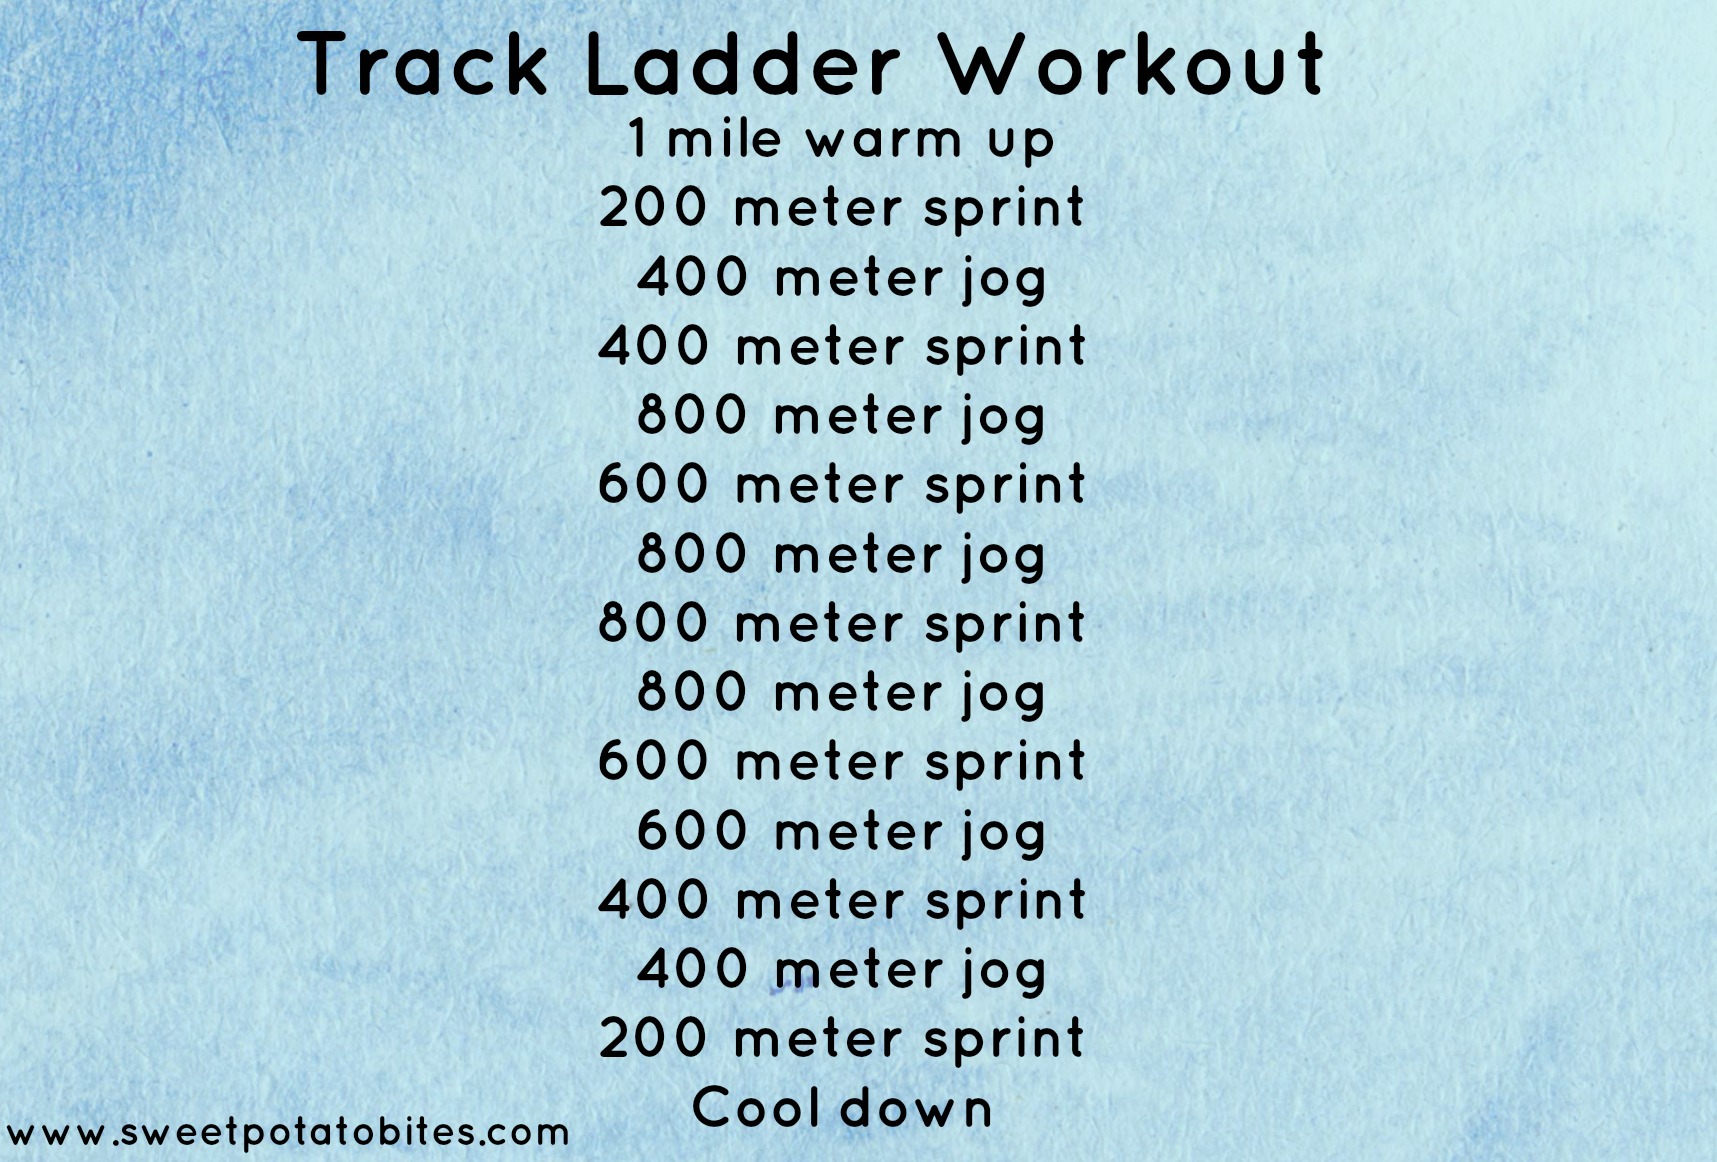 Track Ladder Workout Pin